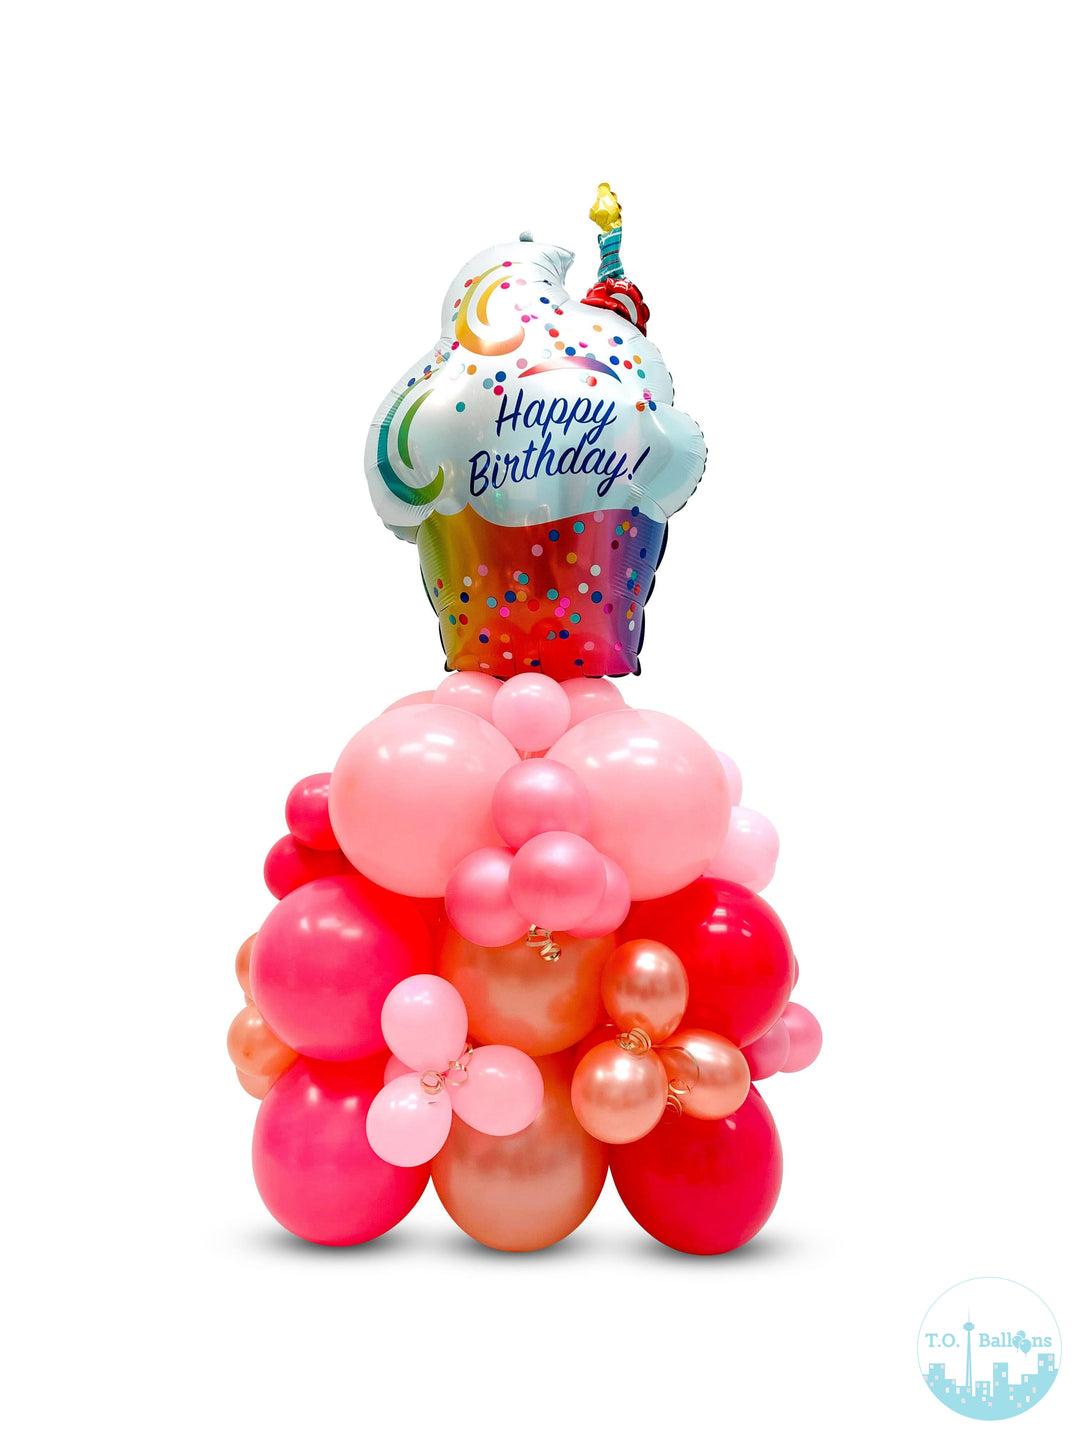 Happy Birthday Cupcake Balloons